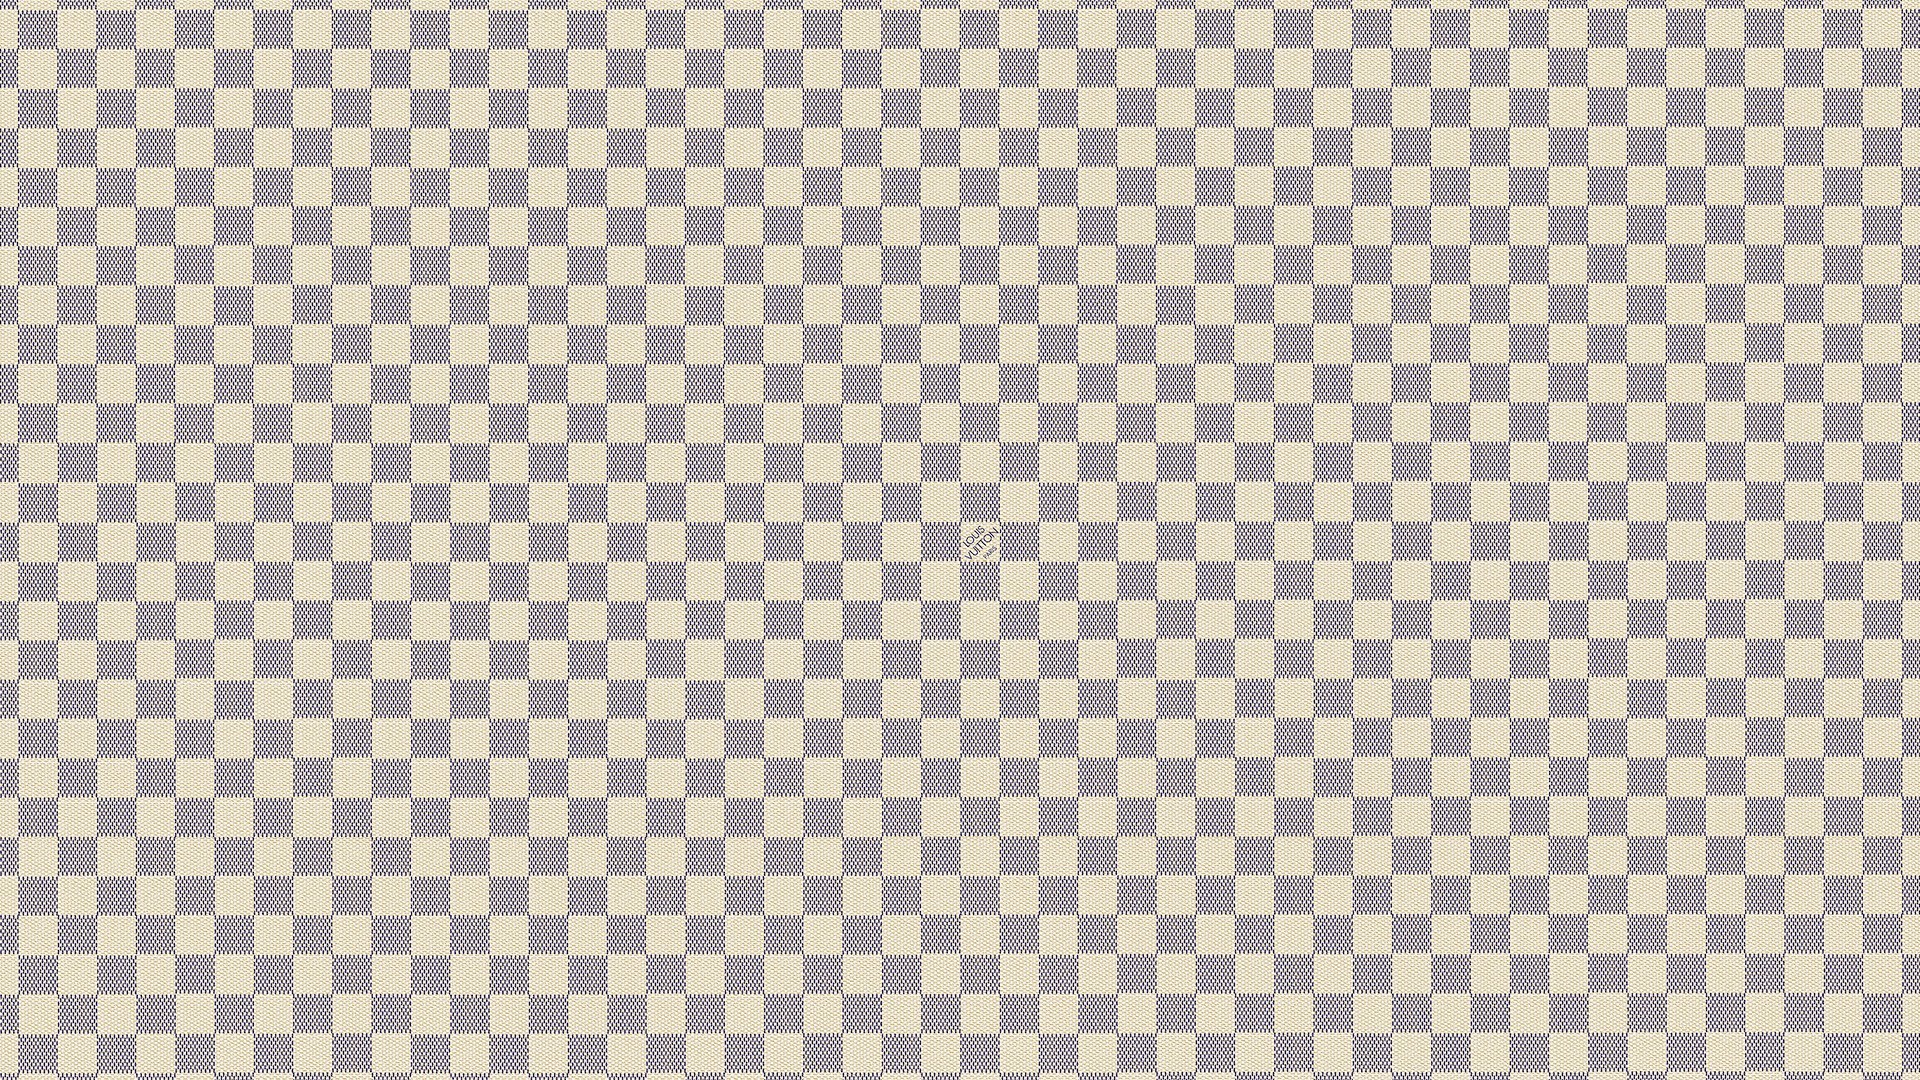 Lv Checkered Background